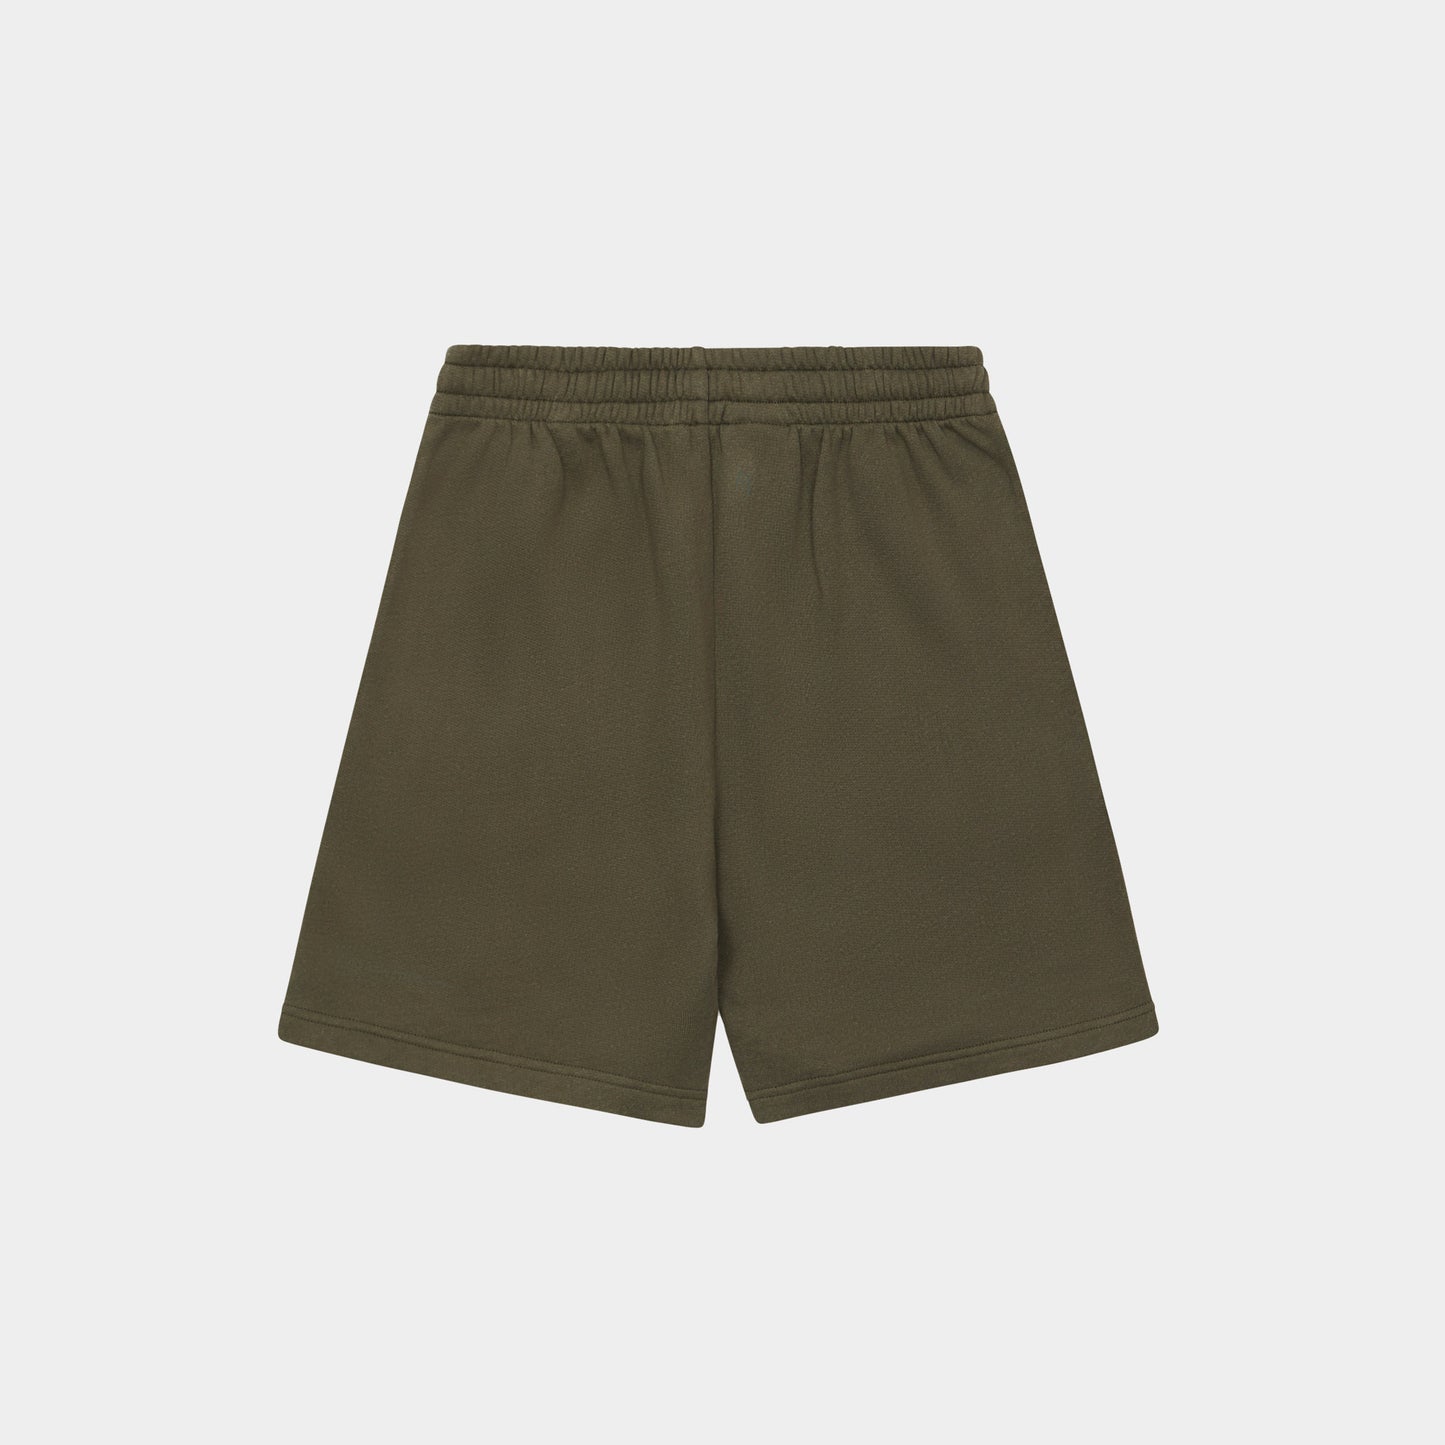 Men's Shorts - Khaki